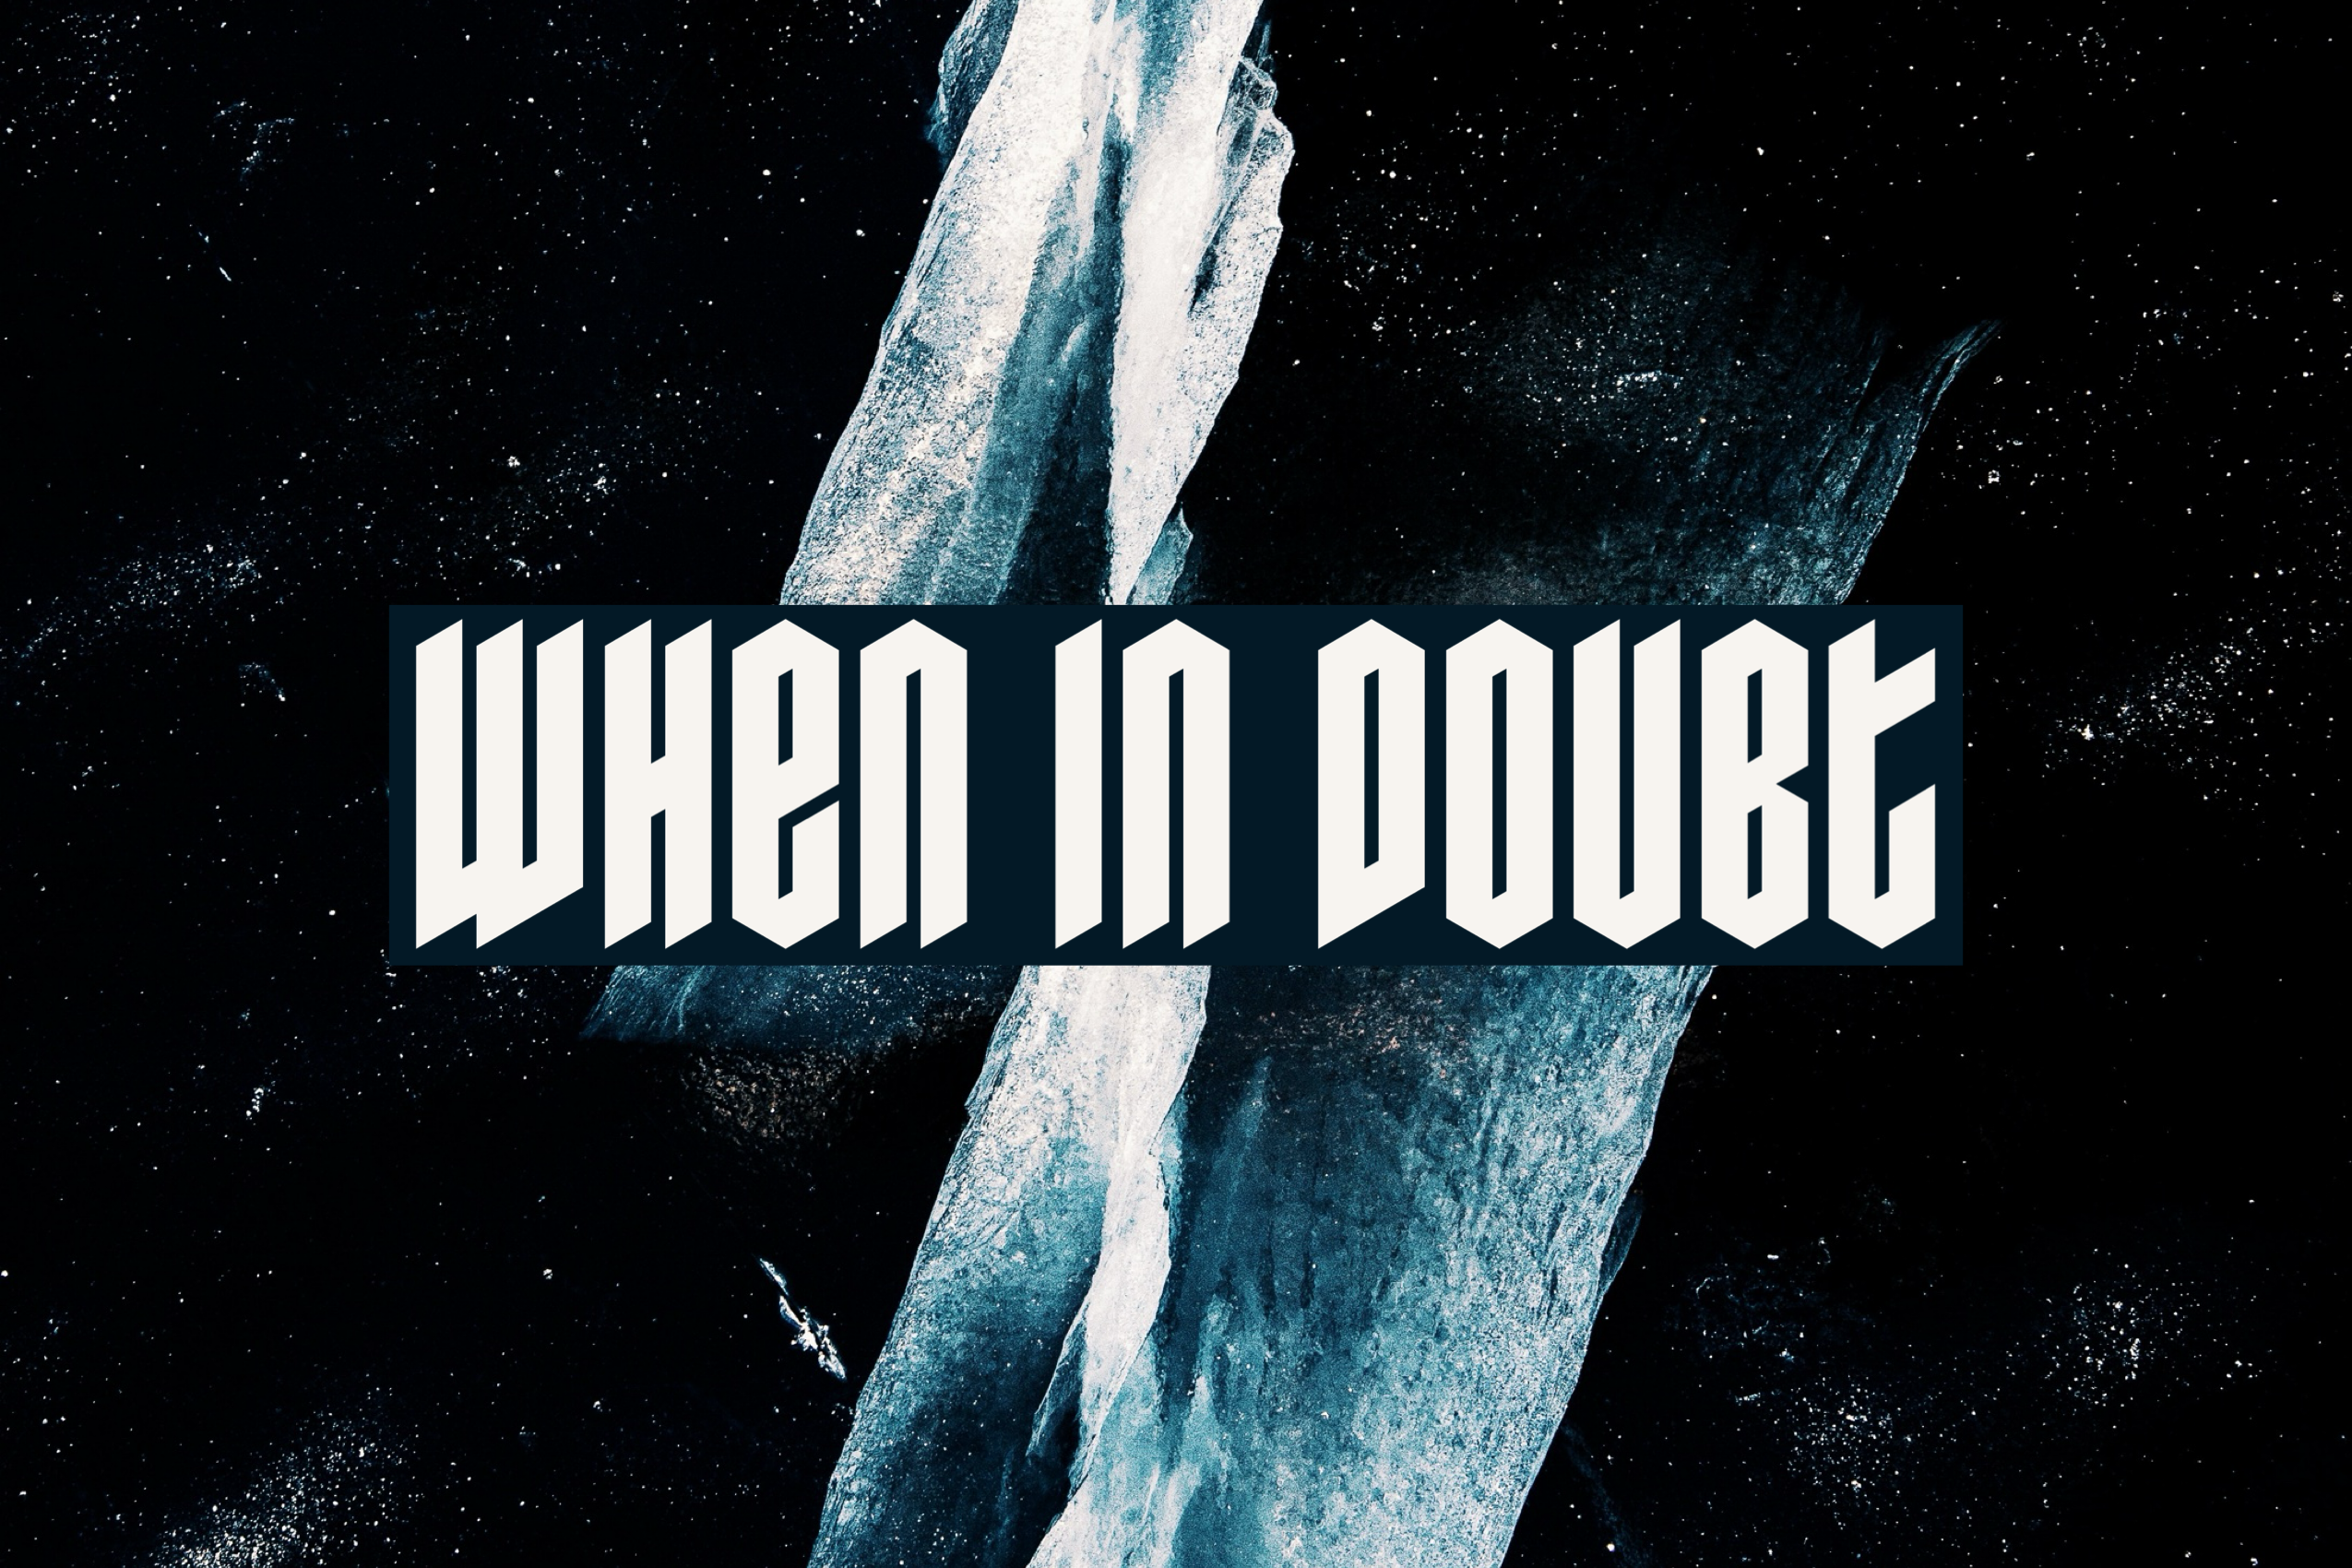 When in Doubt